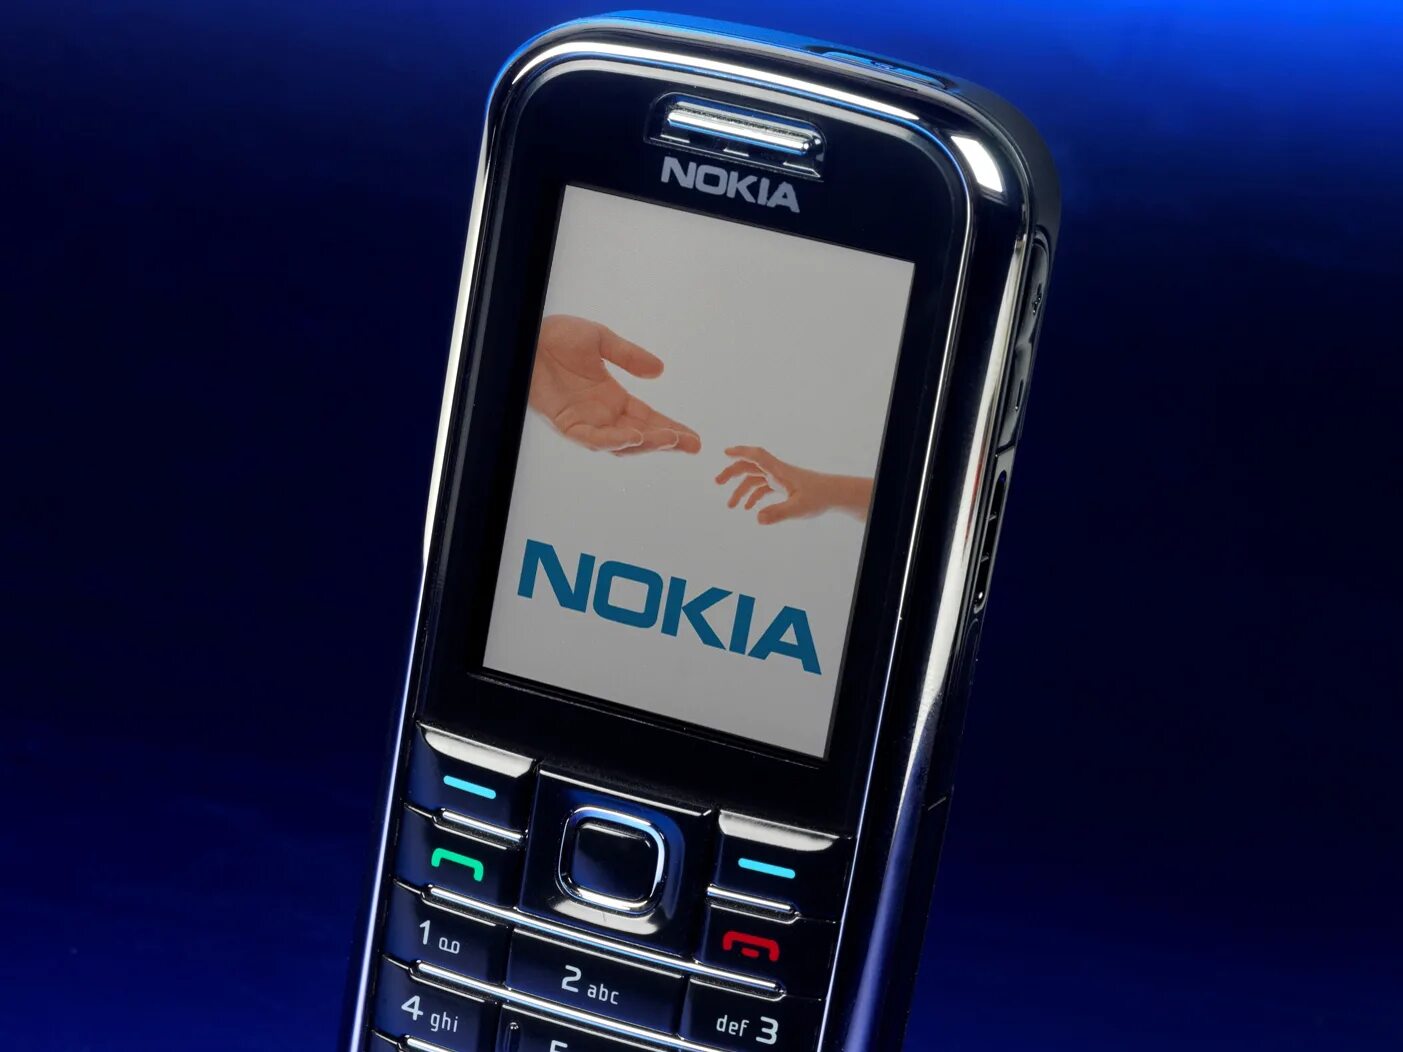 Nokia 6233 Classic. Nokia 6233 XPRESSMUSIC. 6233 Nokia Nokia. Нокия 6233 Классик. Вызовы телефонов нокиа